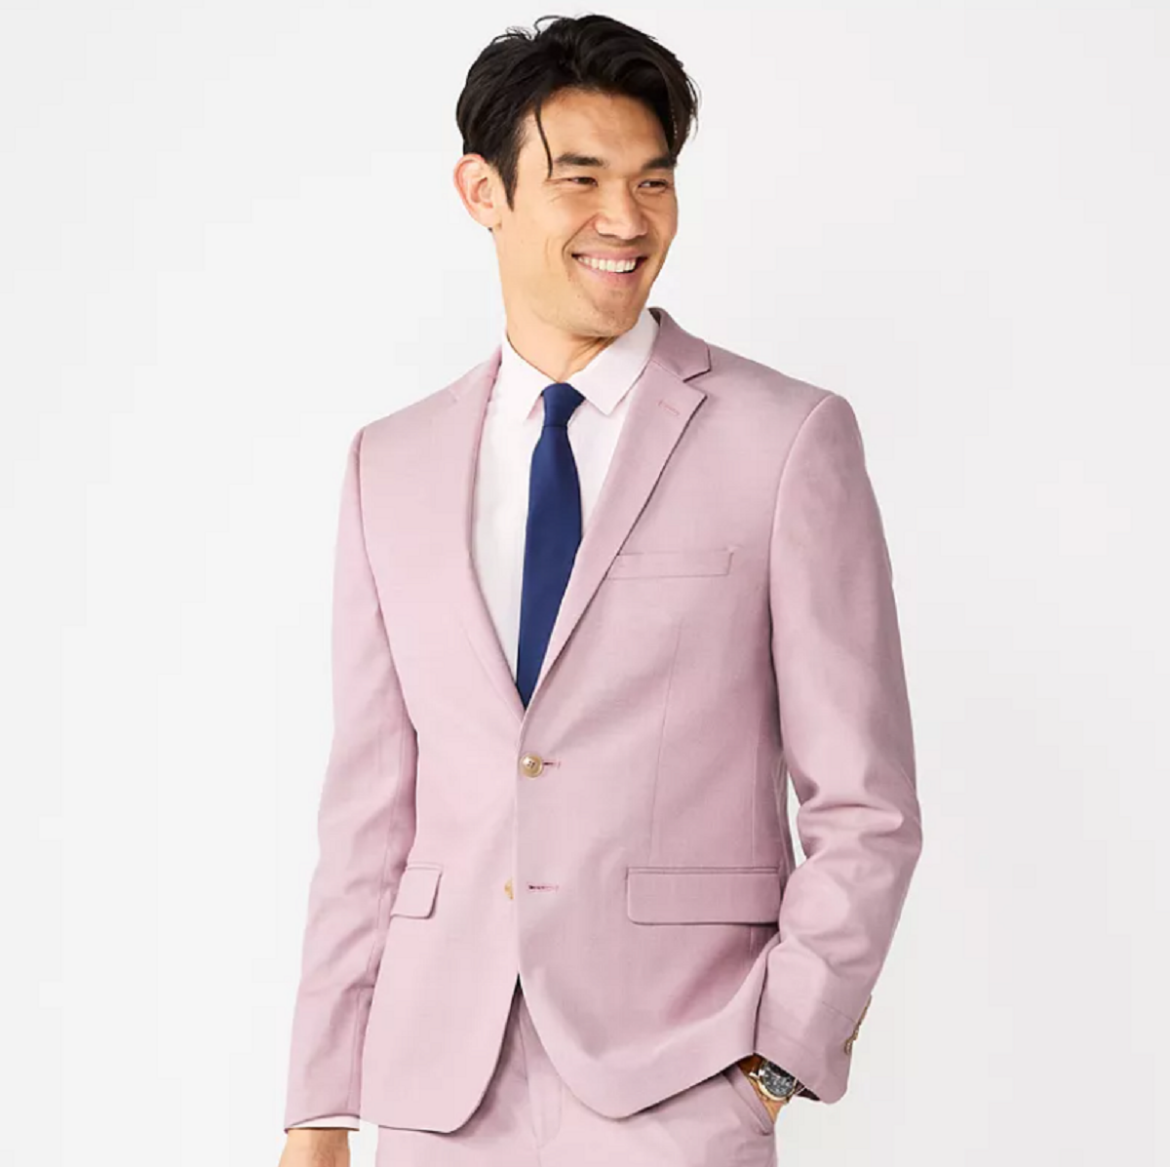 Men's Apt. 9® Premier Flex Performance Extra-Slim Washable Suit Jacket, Easter Clearance